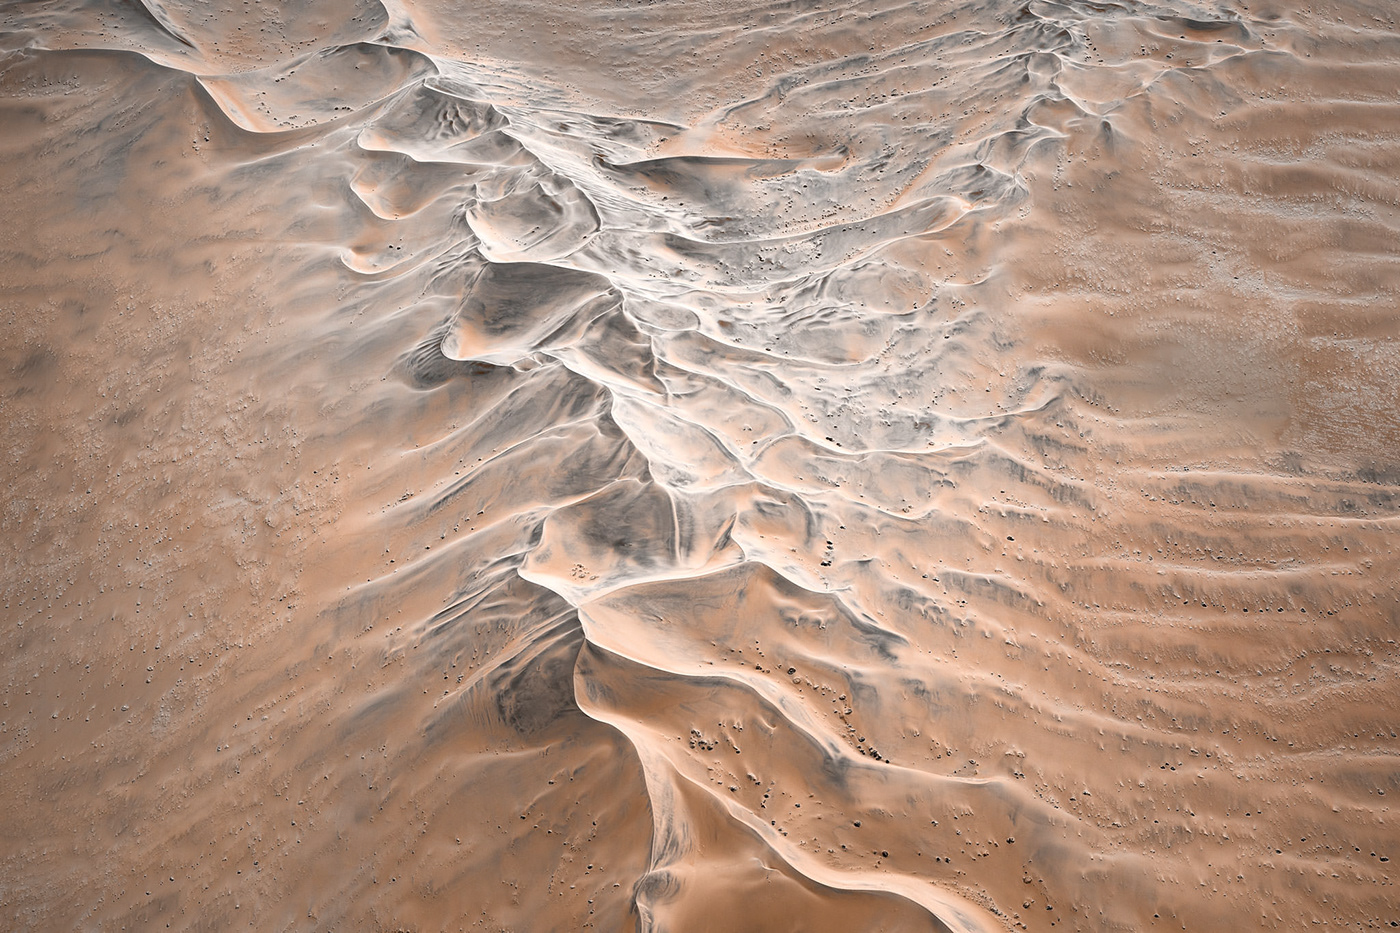 abstract Nature Landscape sand dunes desert landscape photography landscapes aerial landscape